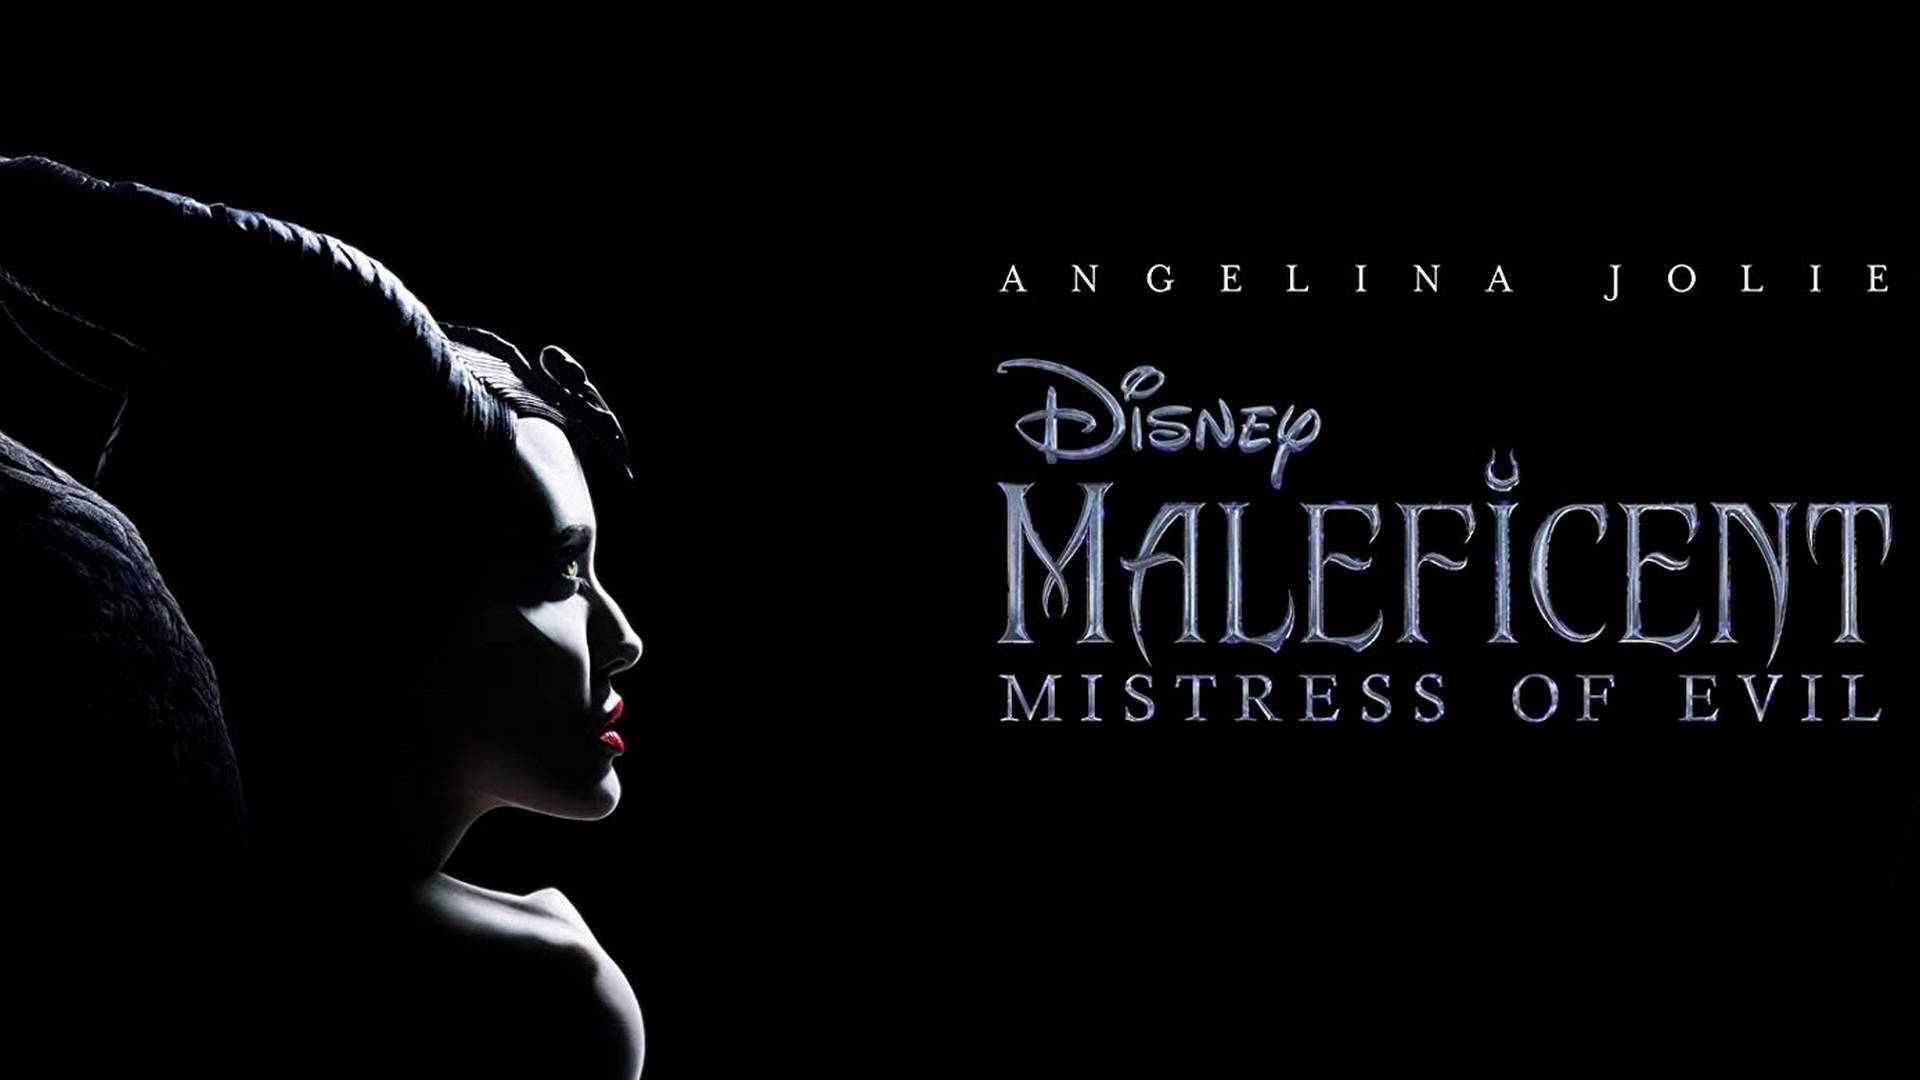 Maleficent Movie Poster Background